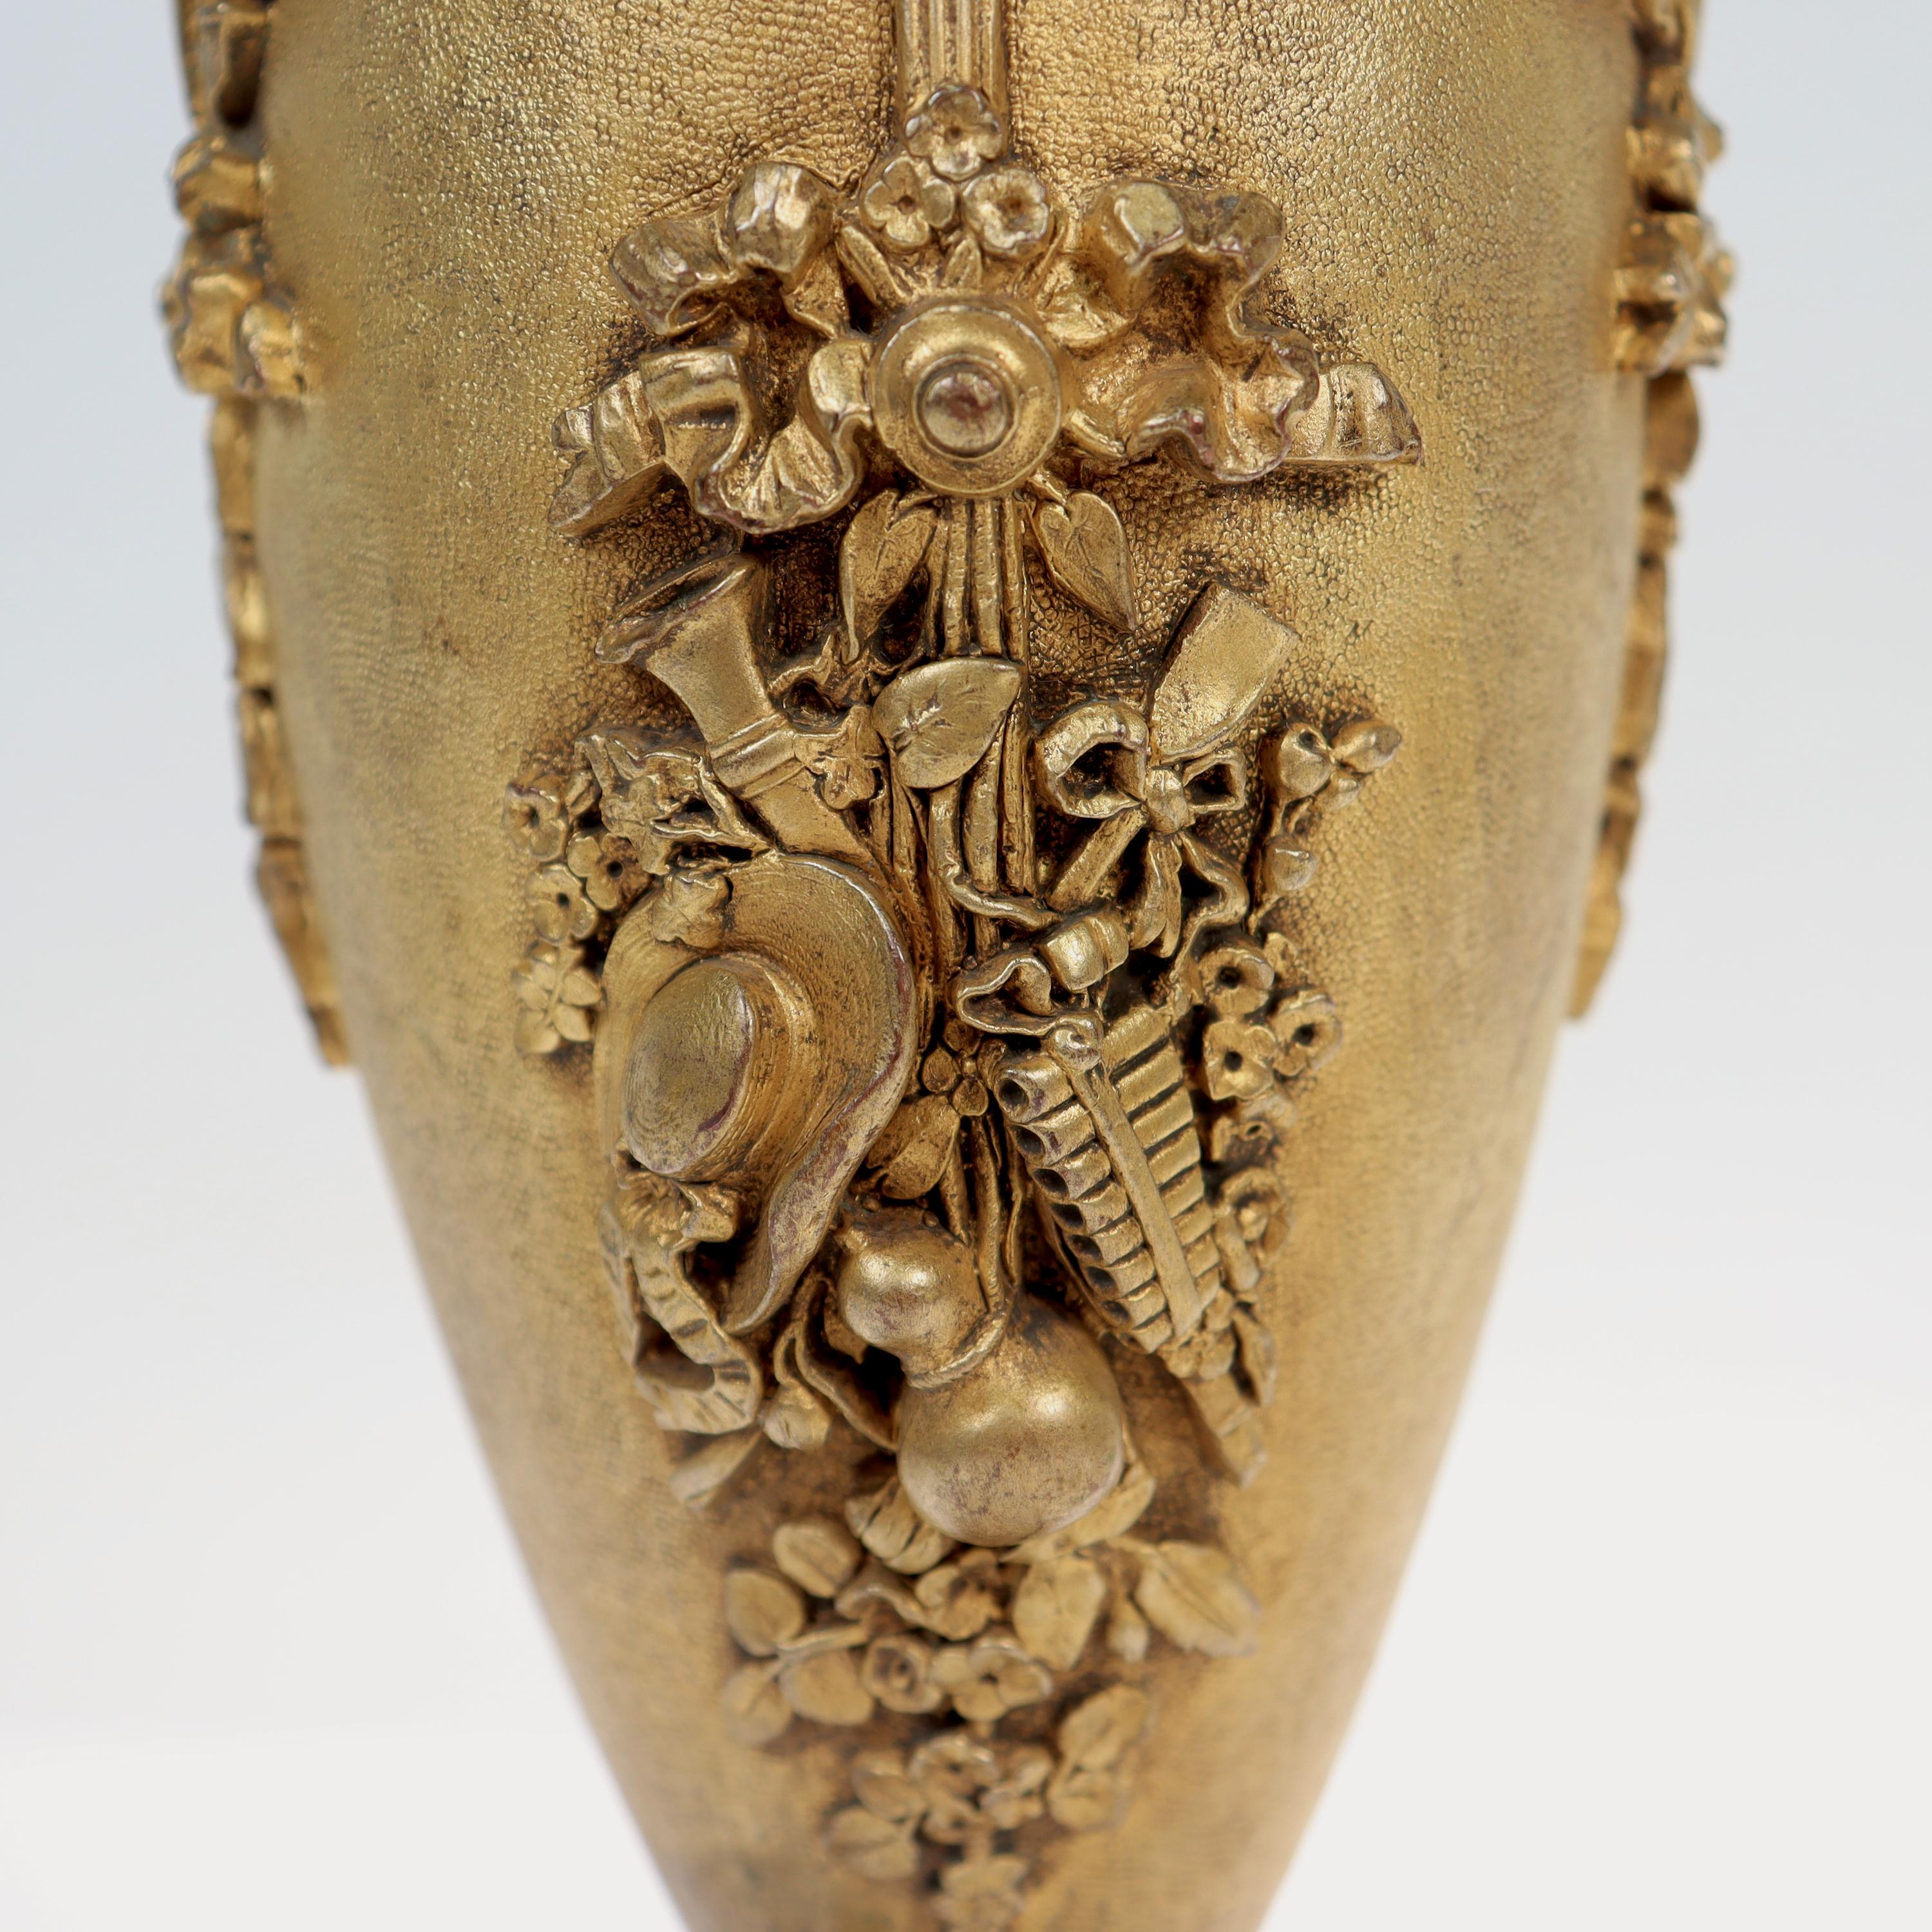 Antique Second Empire French Doré Gilt Bronze Vases or Urns For Sale 3